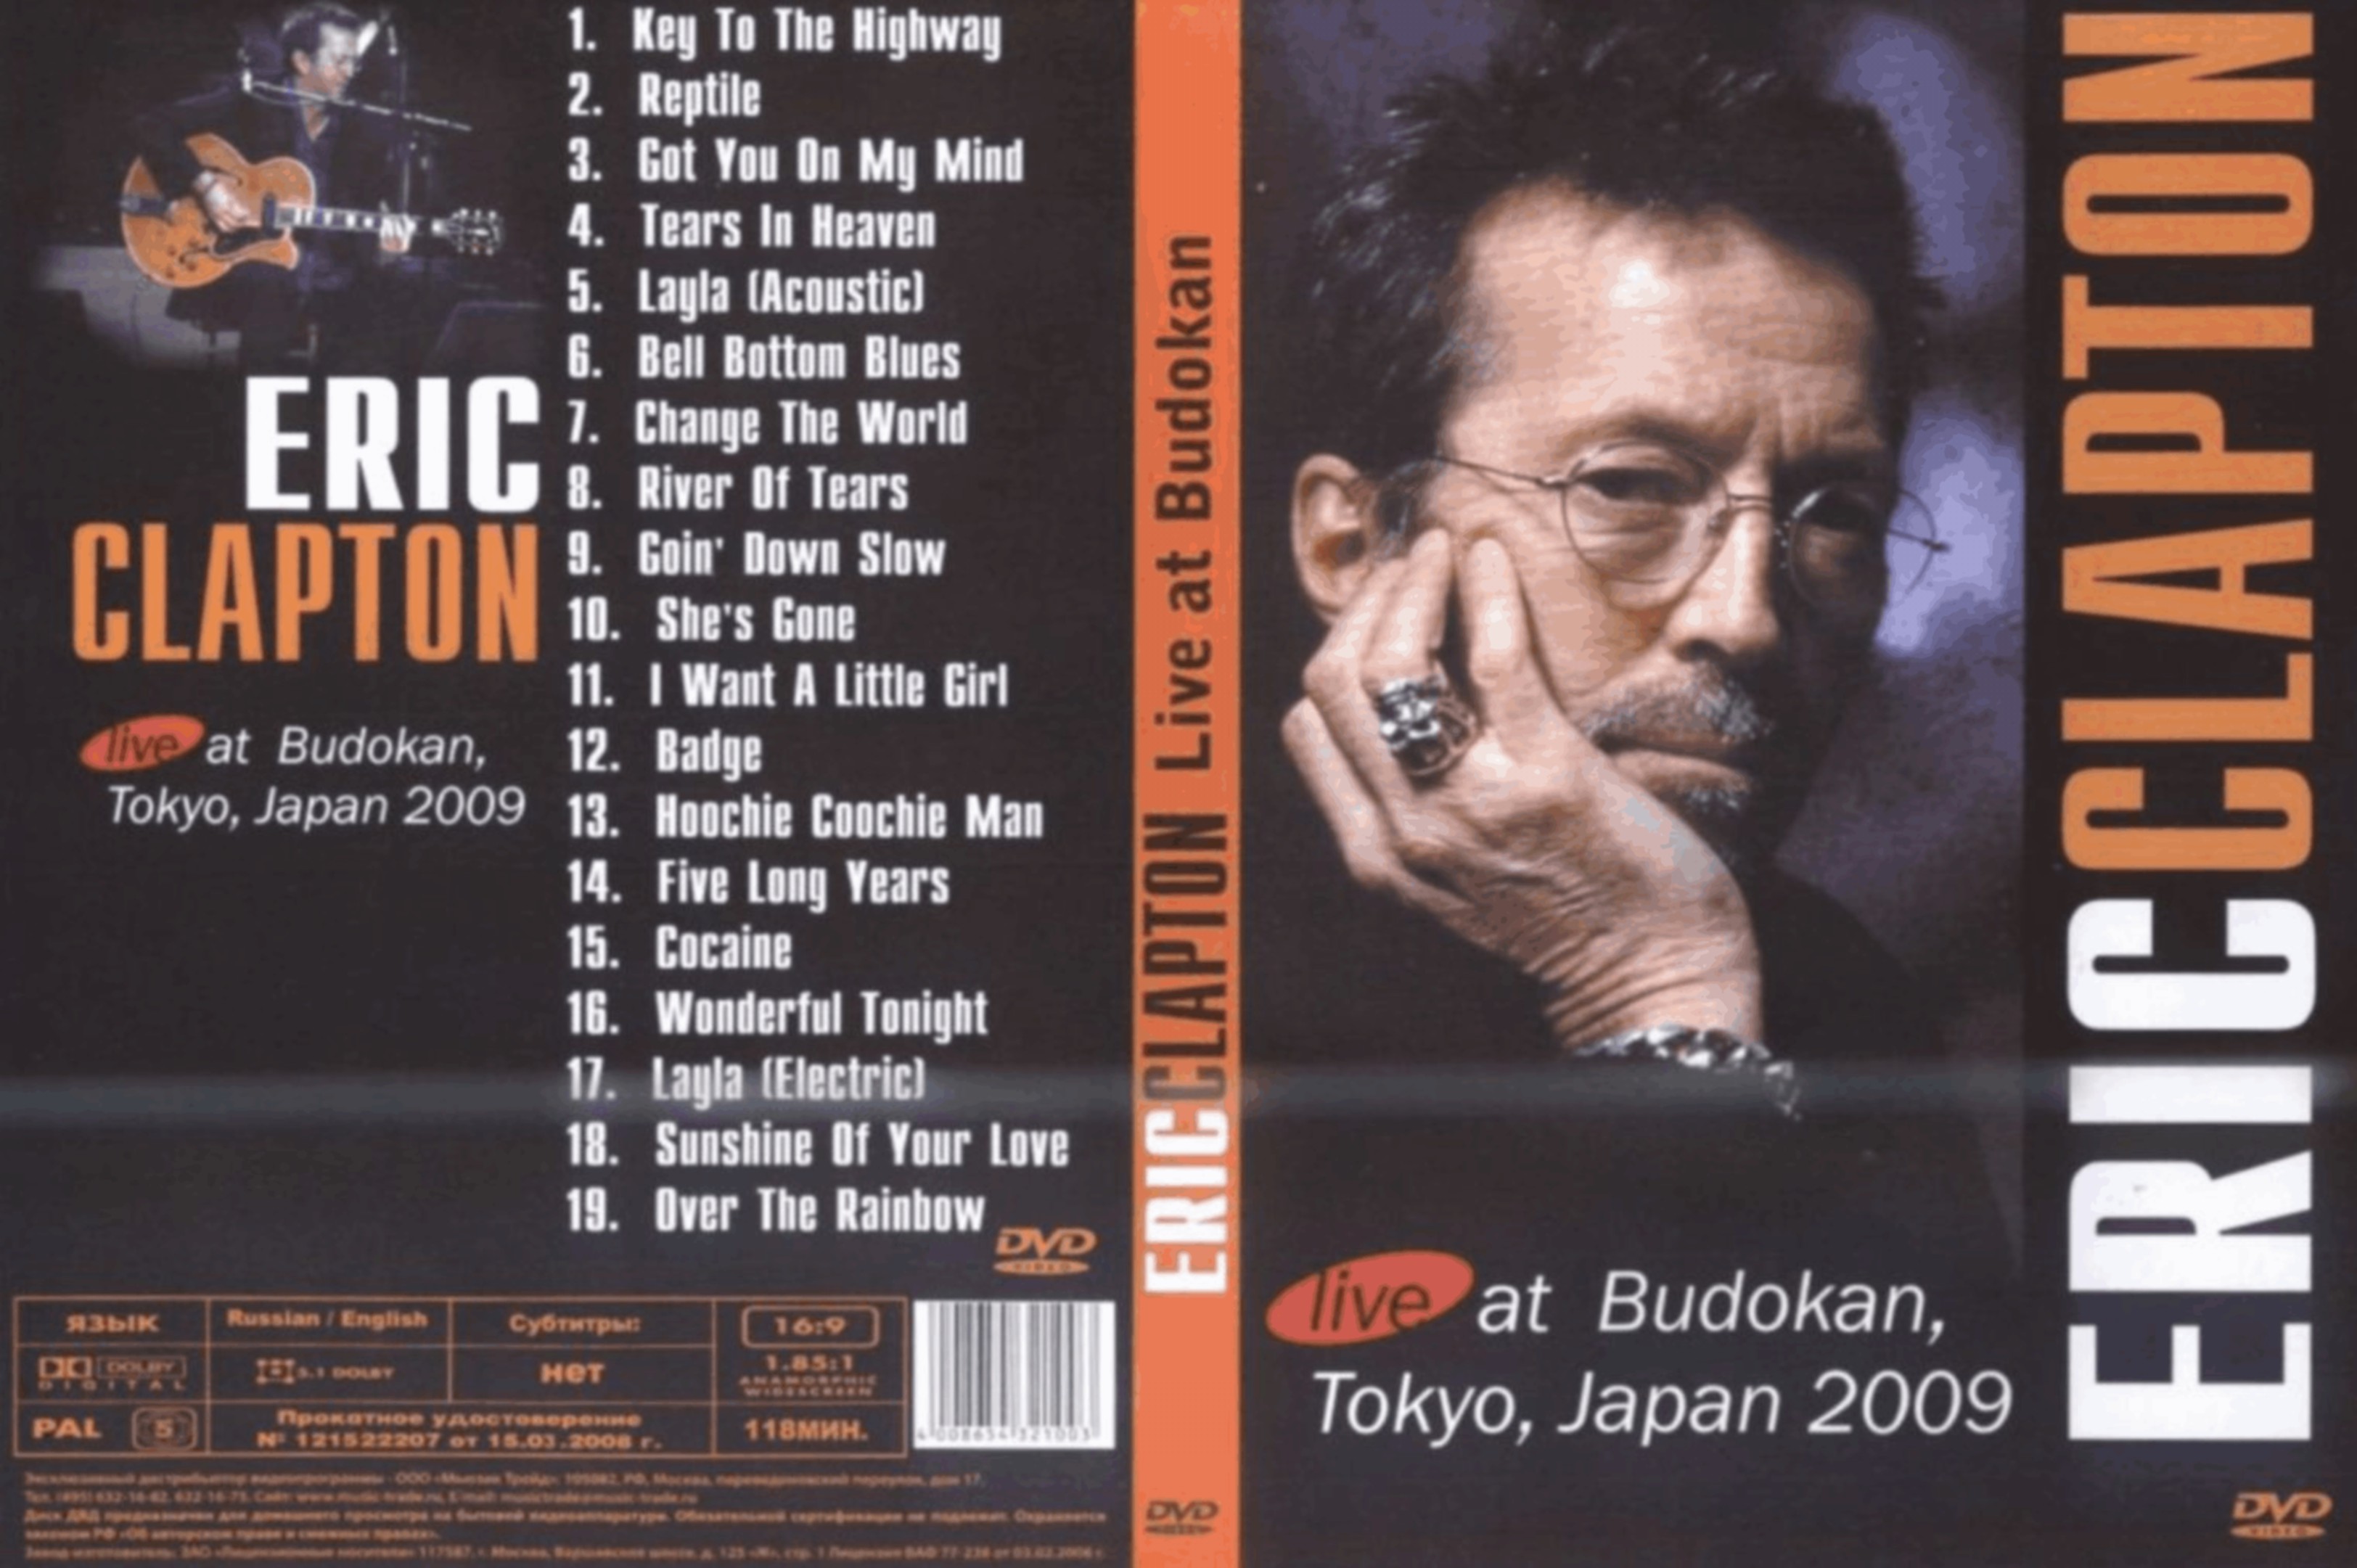 Jaquette DVD Eric Clapton live at budokan